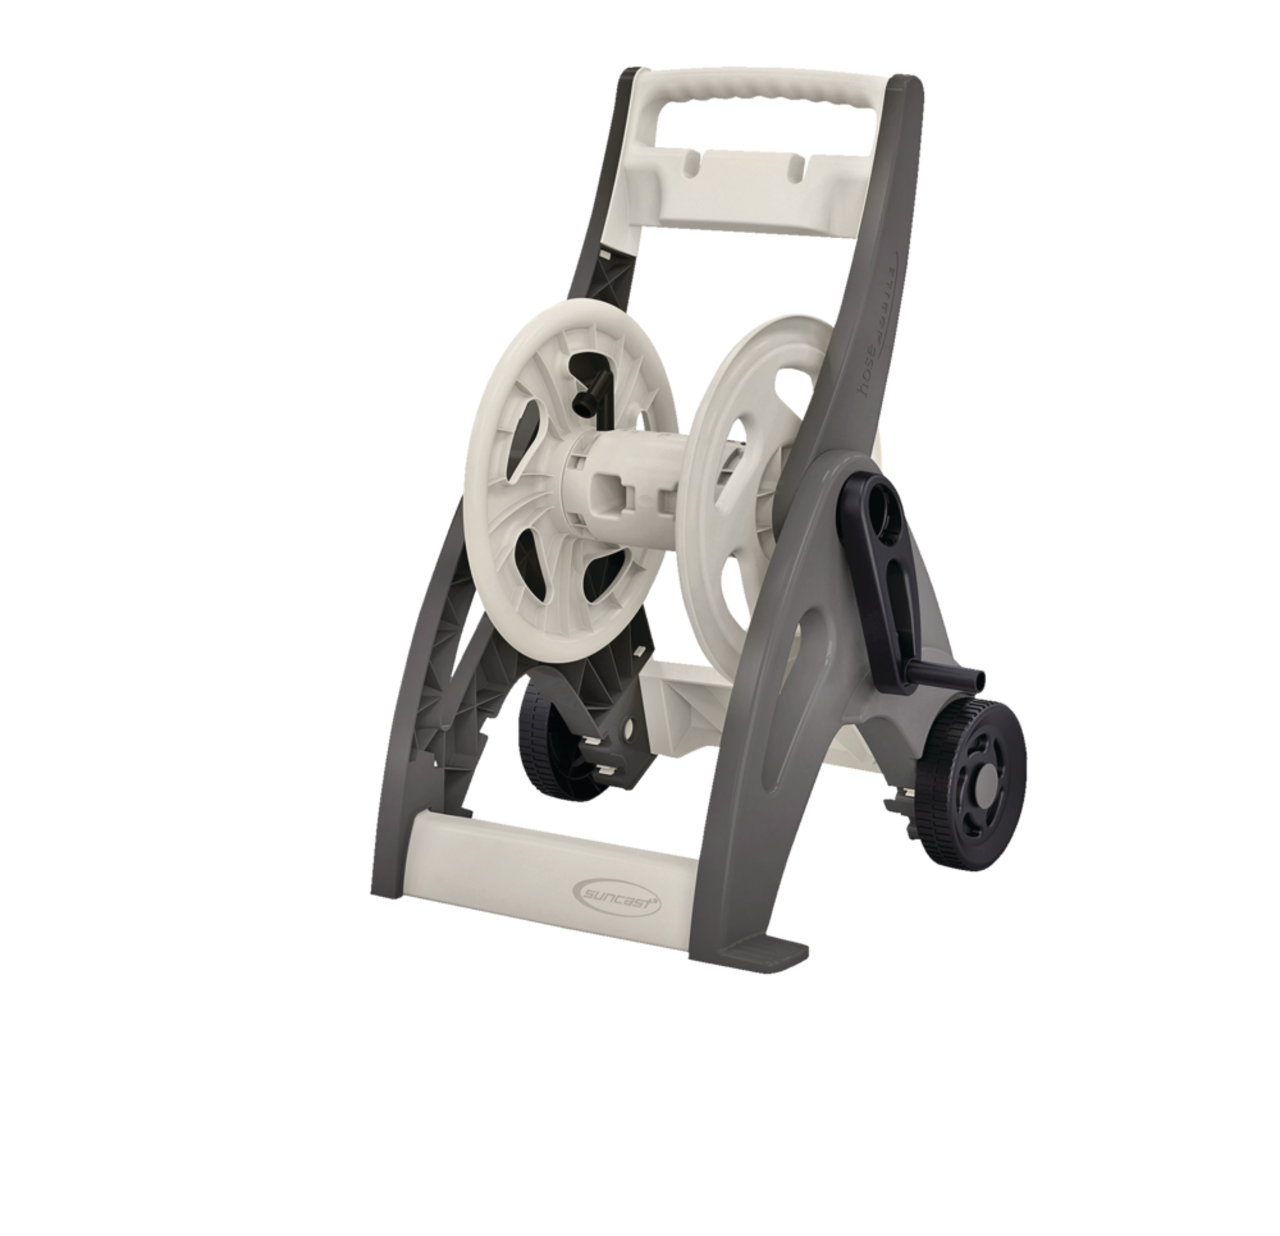 Suncast Professional Portable 200' Garden Hose Reel Wheeled Cart, Black (3  Pack), 1 Piece - Jay C Food Stores